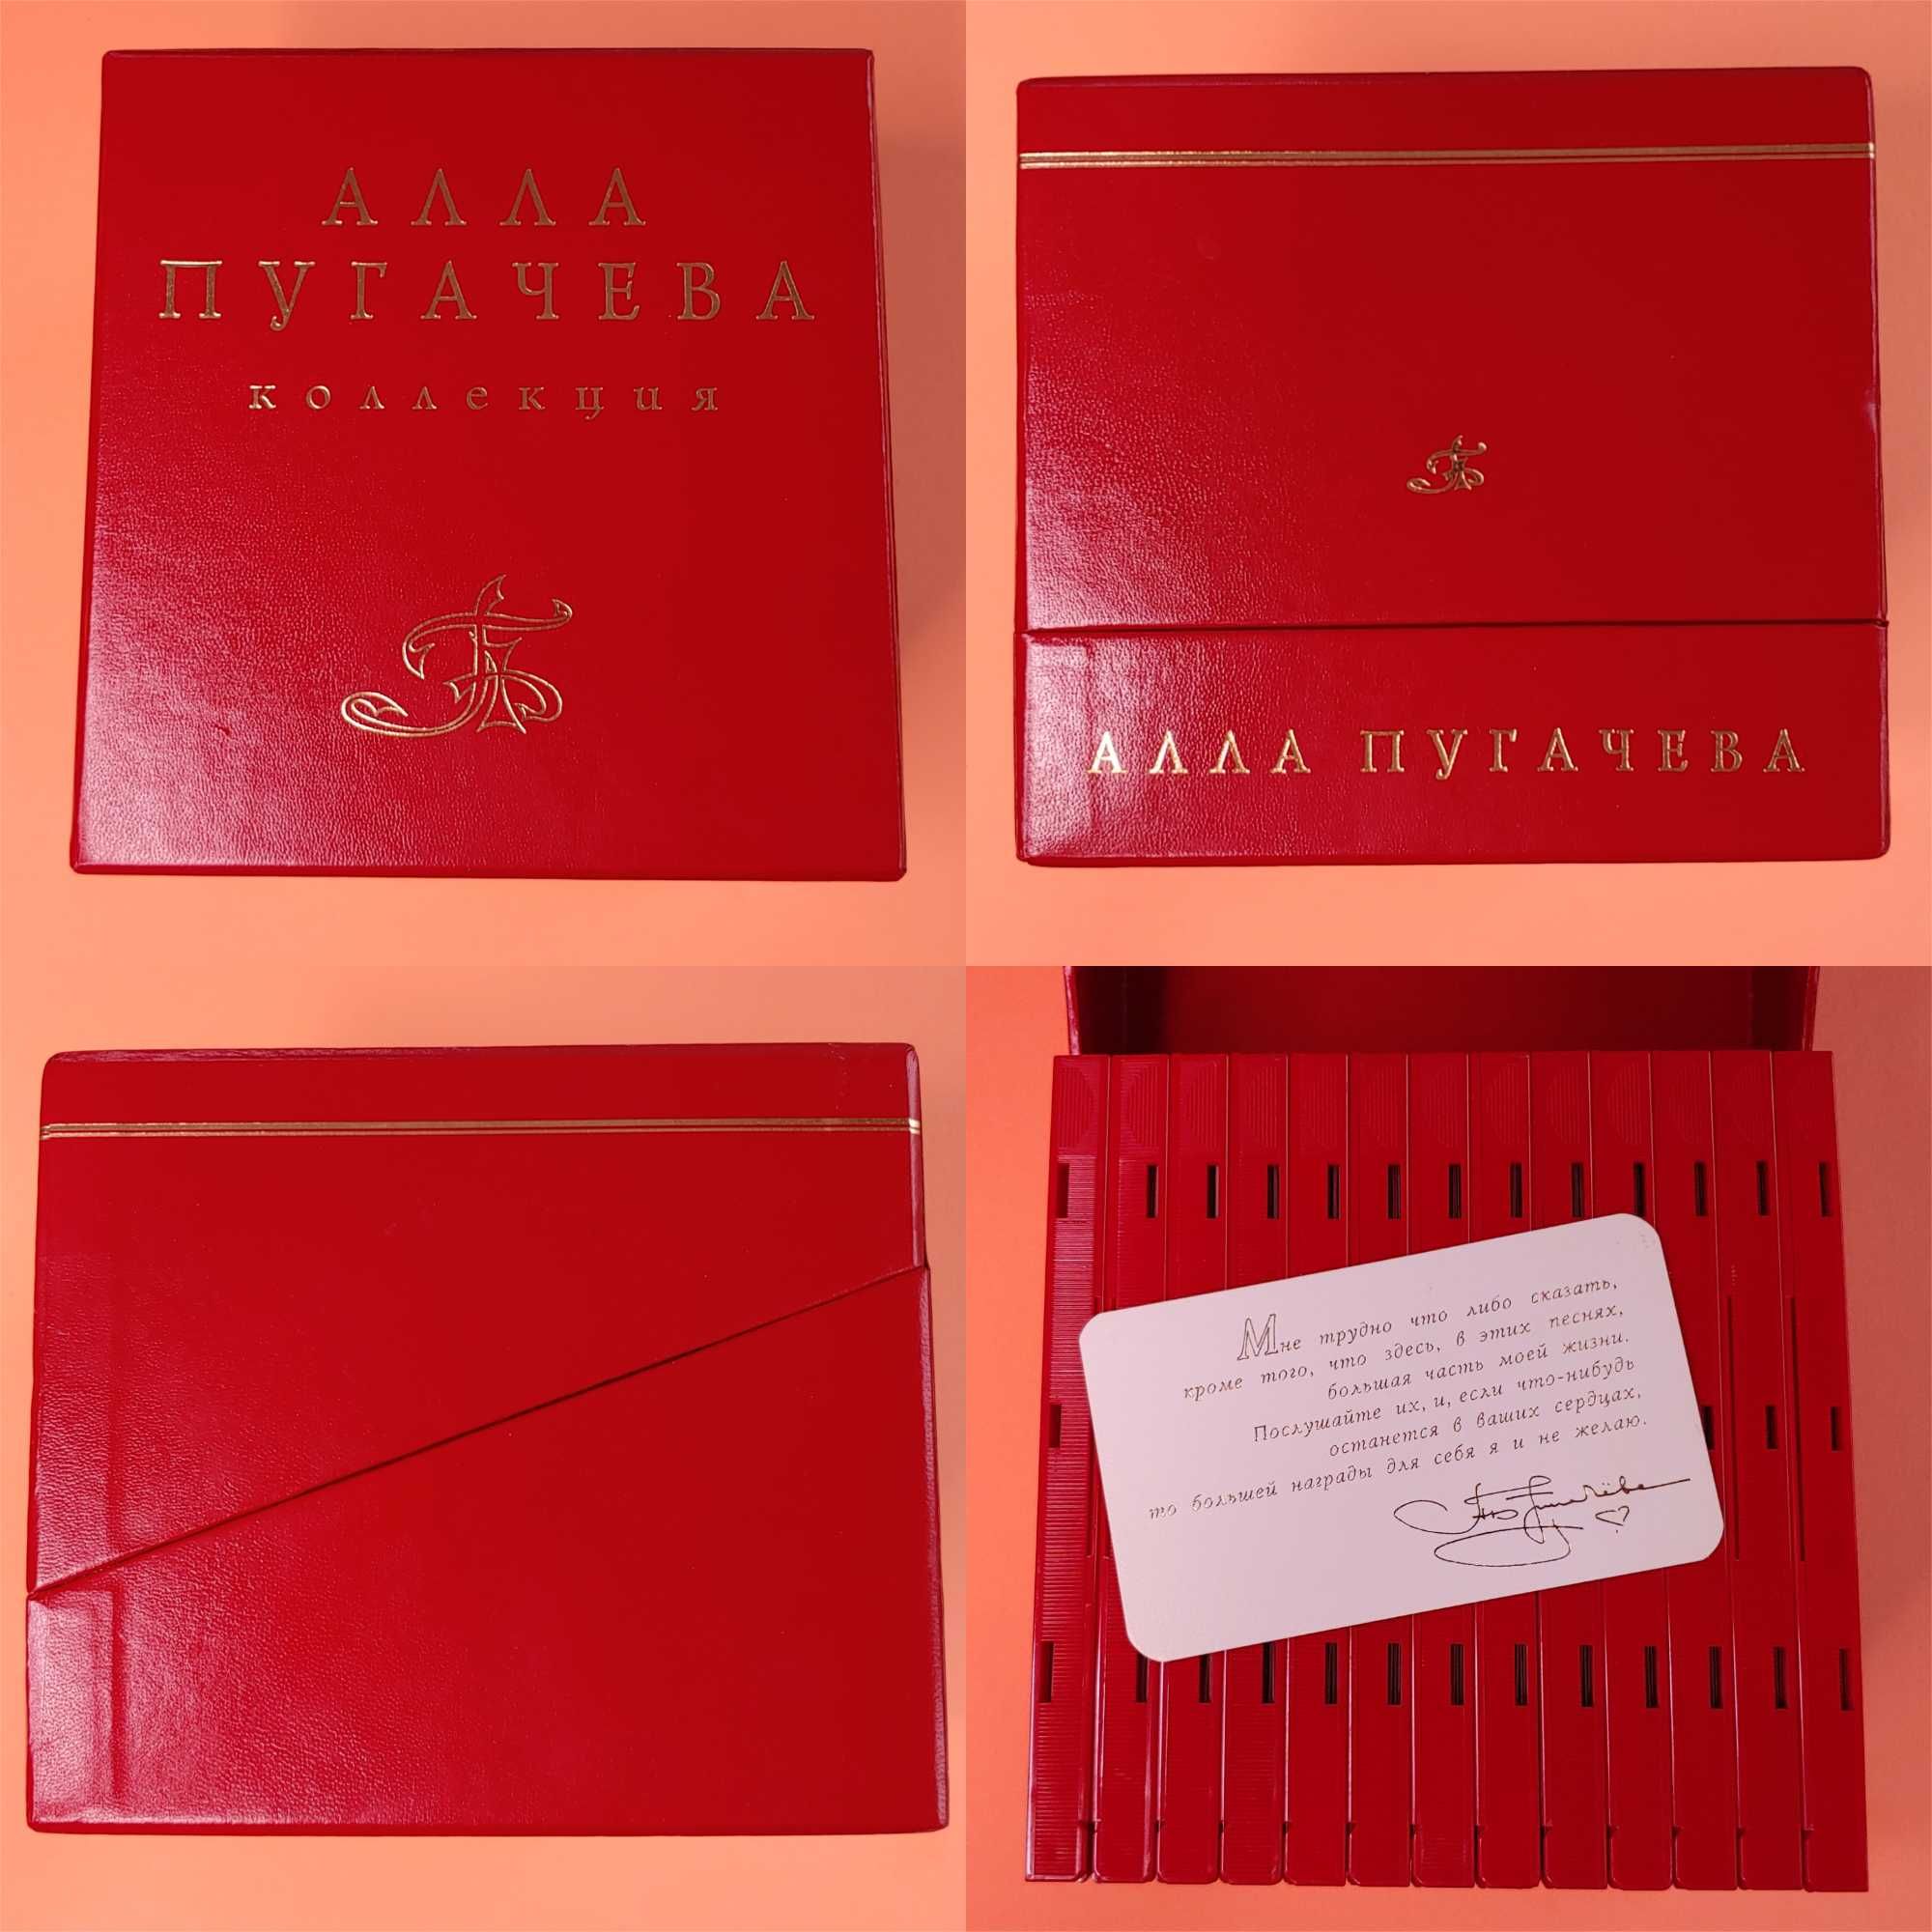 АЛЛА ПУГАЧЁВА «Коллекция» (Collection). Box set 13 CD Made in Austria